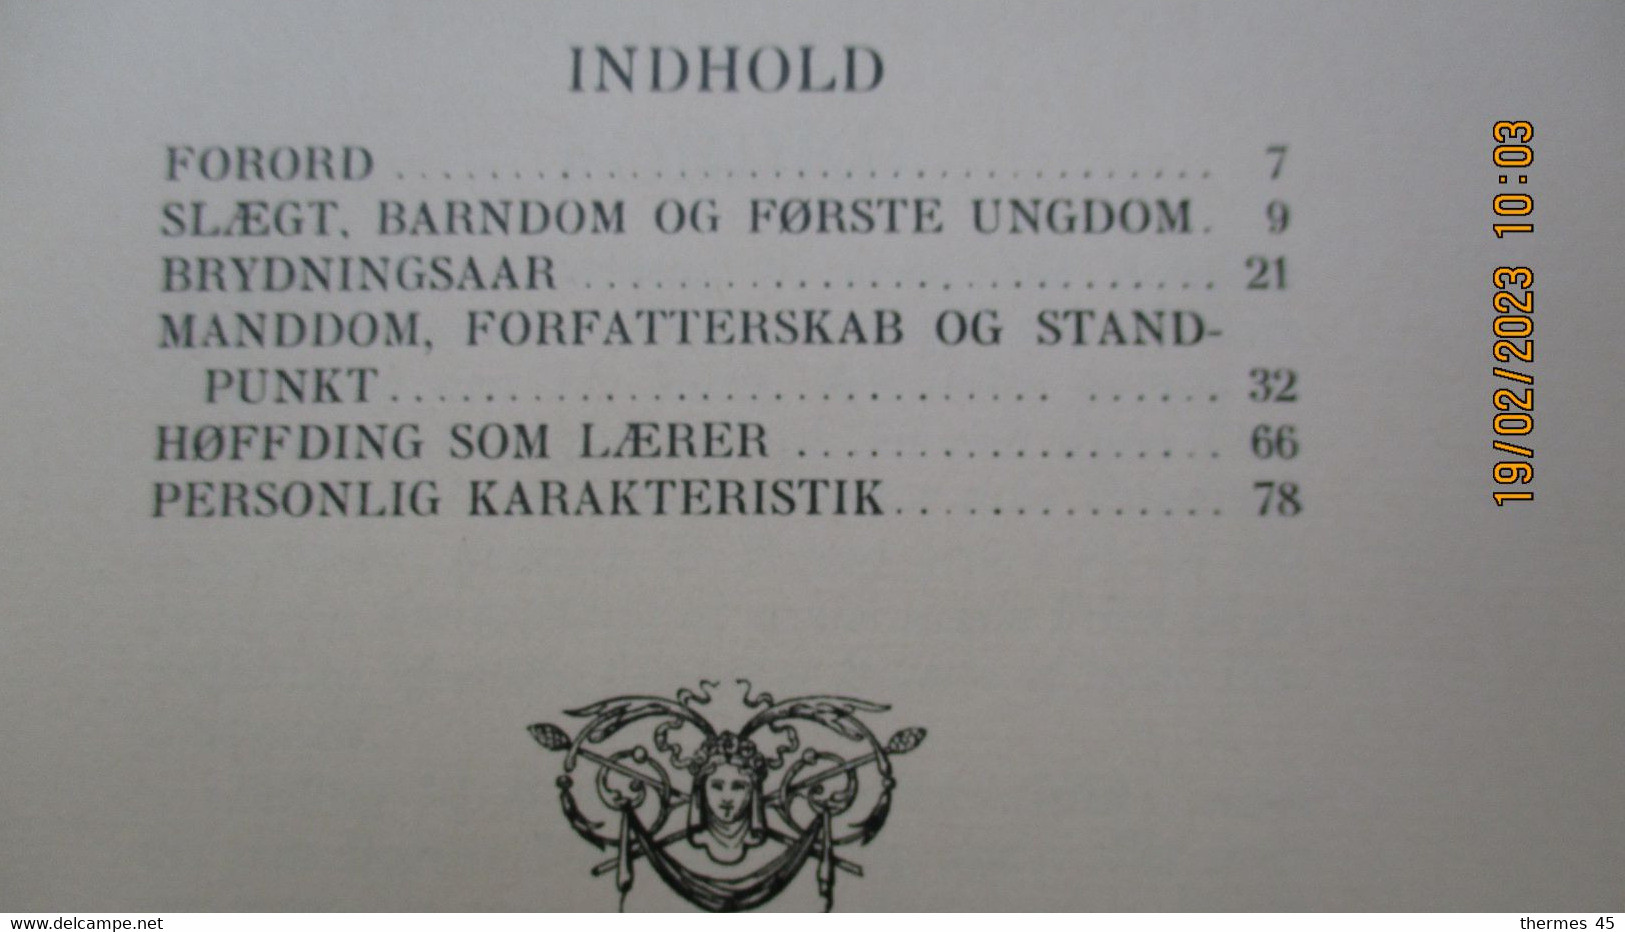 1913 / En Danois / ENVOI / ERIC RINDOM / HARALD HOFFDING / GYLDENDALSKE BOGHANDEL - Scandinavische Talen